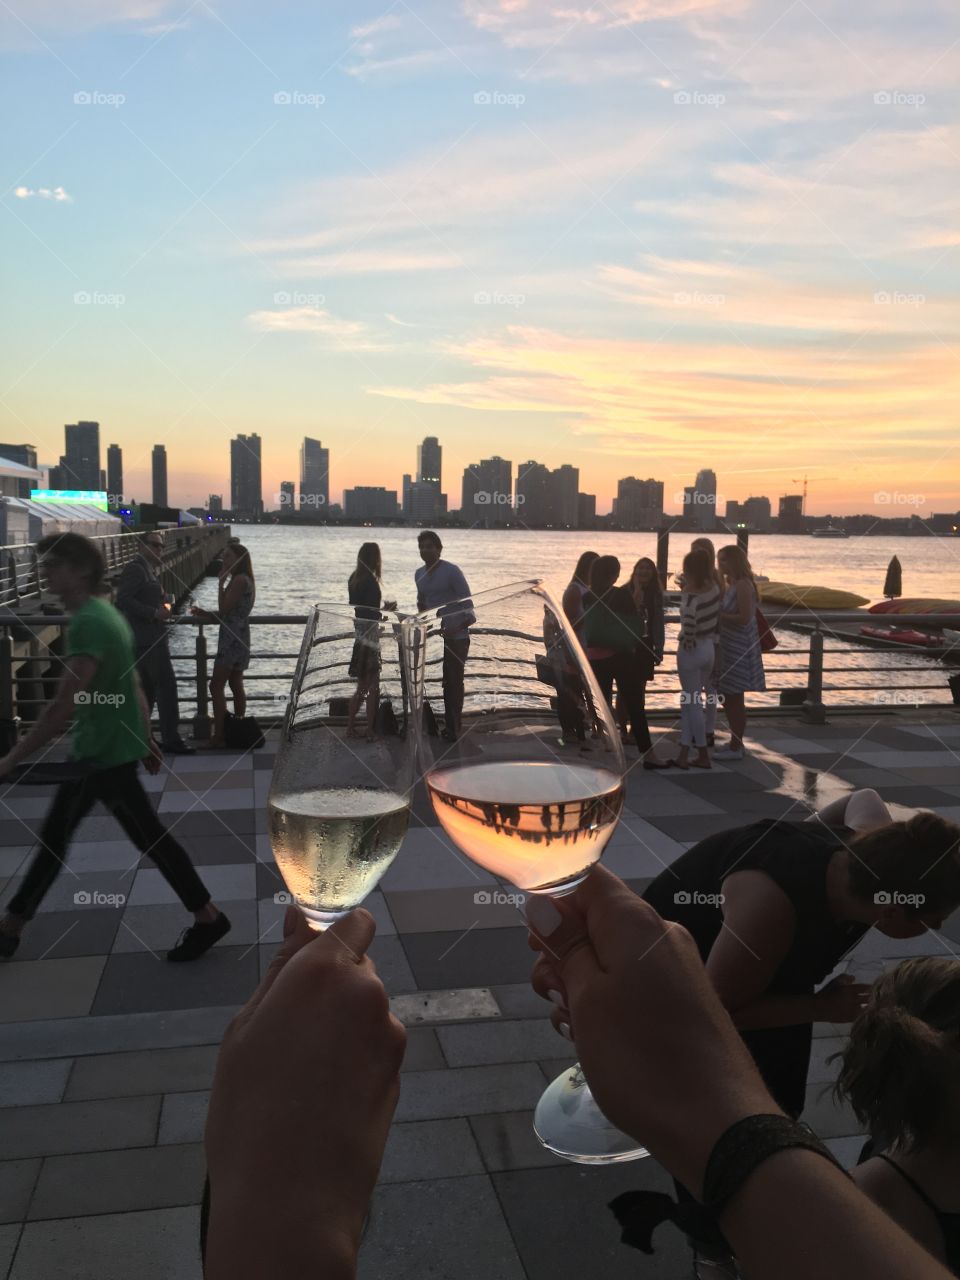 Sunset Reflections 🥂
City Vineyard, NYC